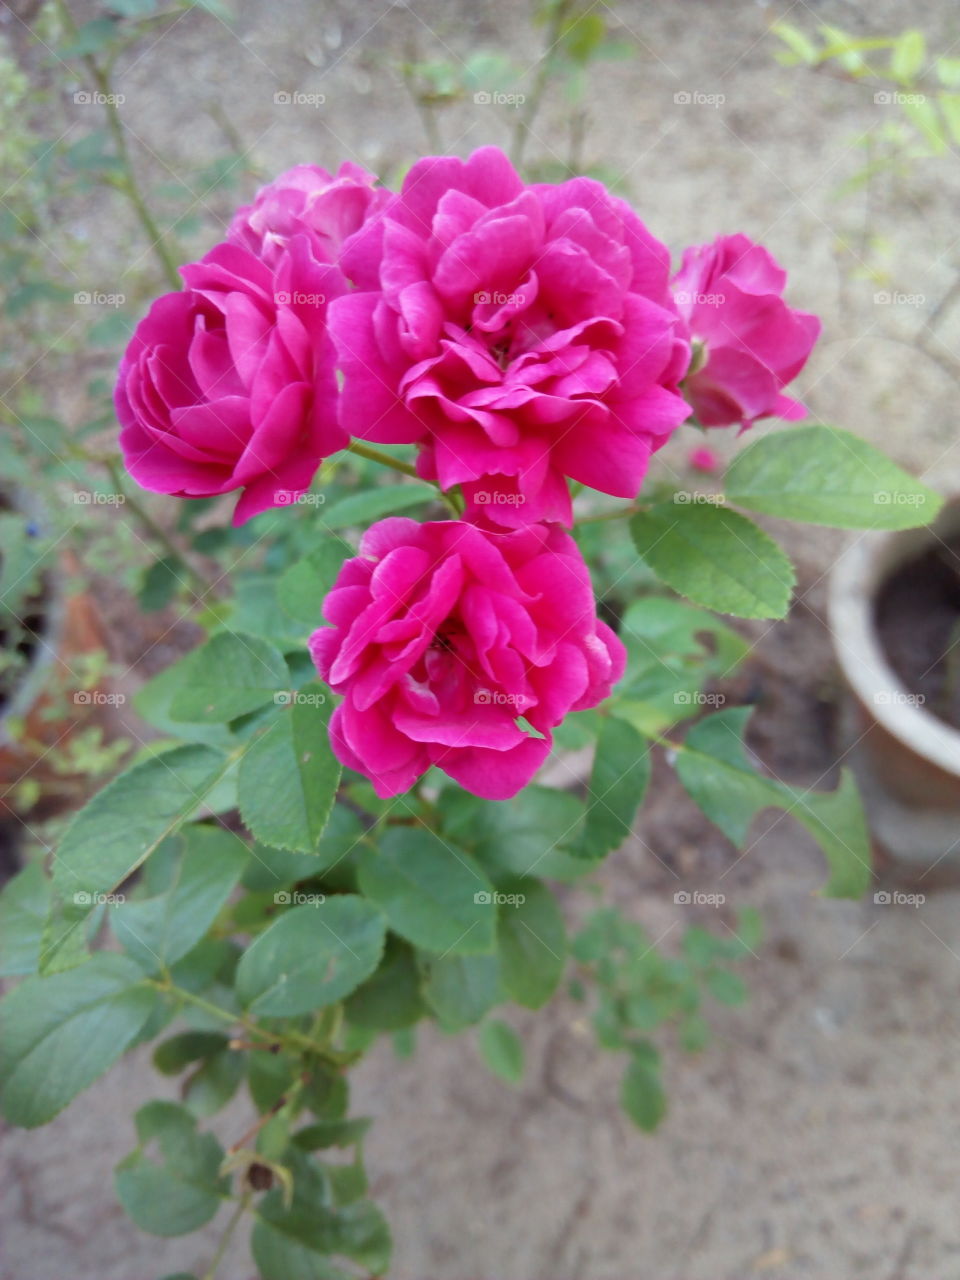 ROSE FLOWERS